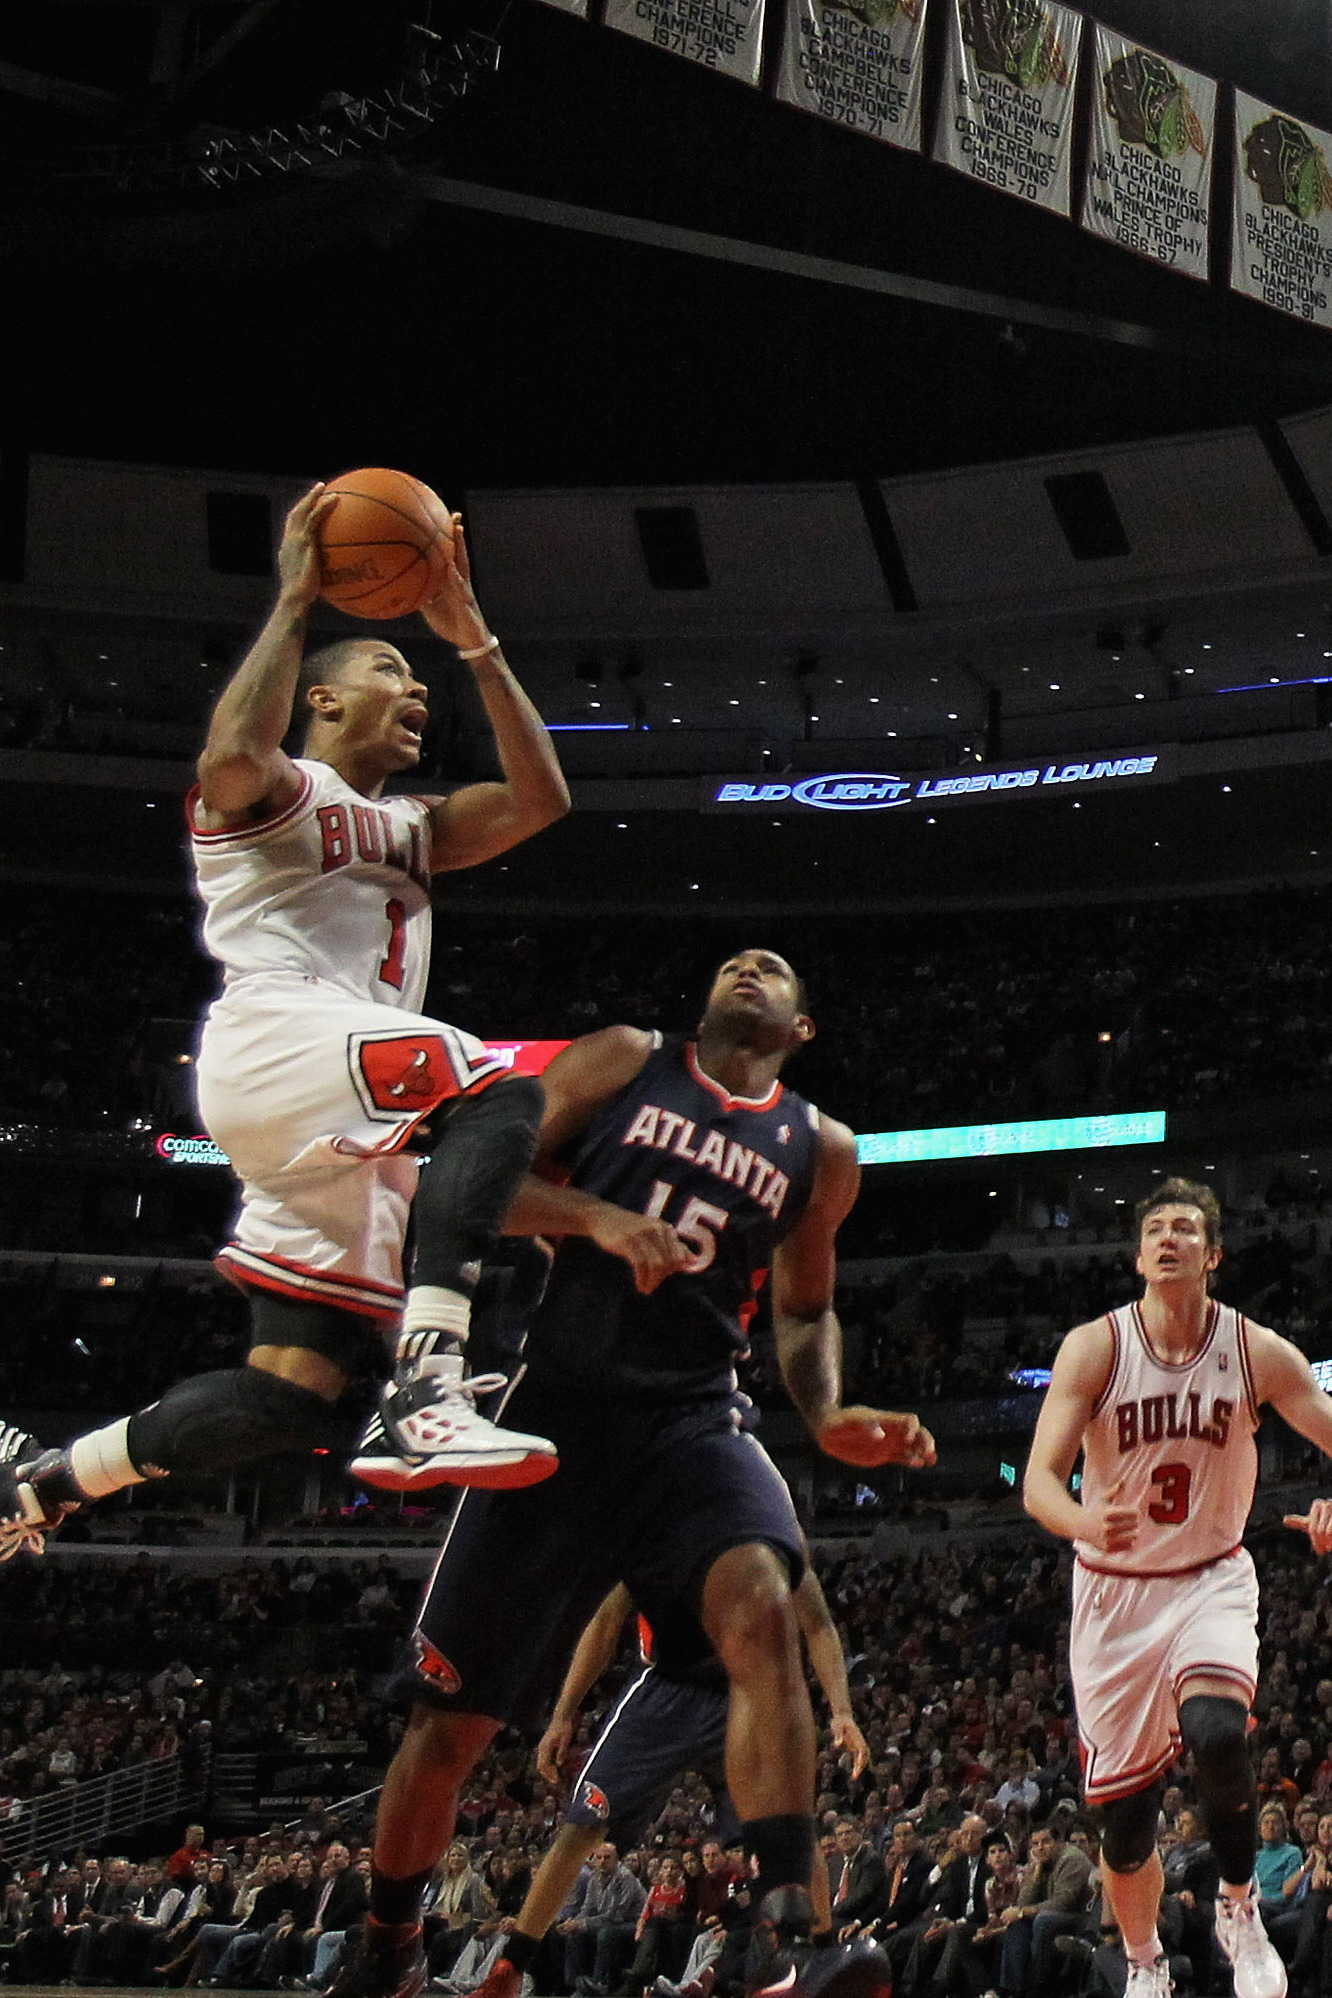 New York Basketball on X: Grizzlies greet #23 Derrick Rose back